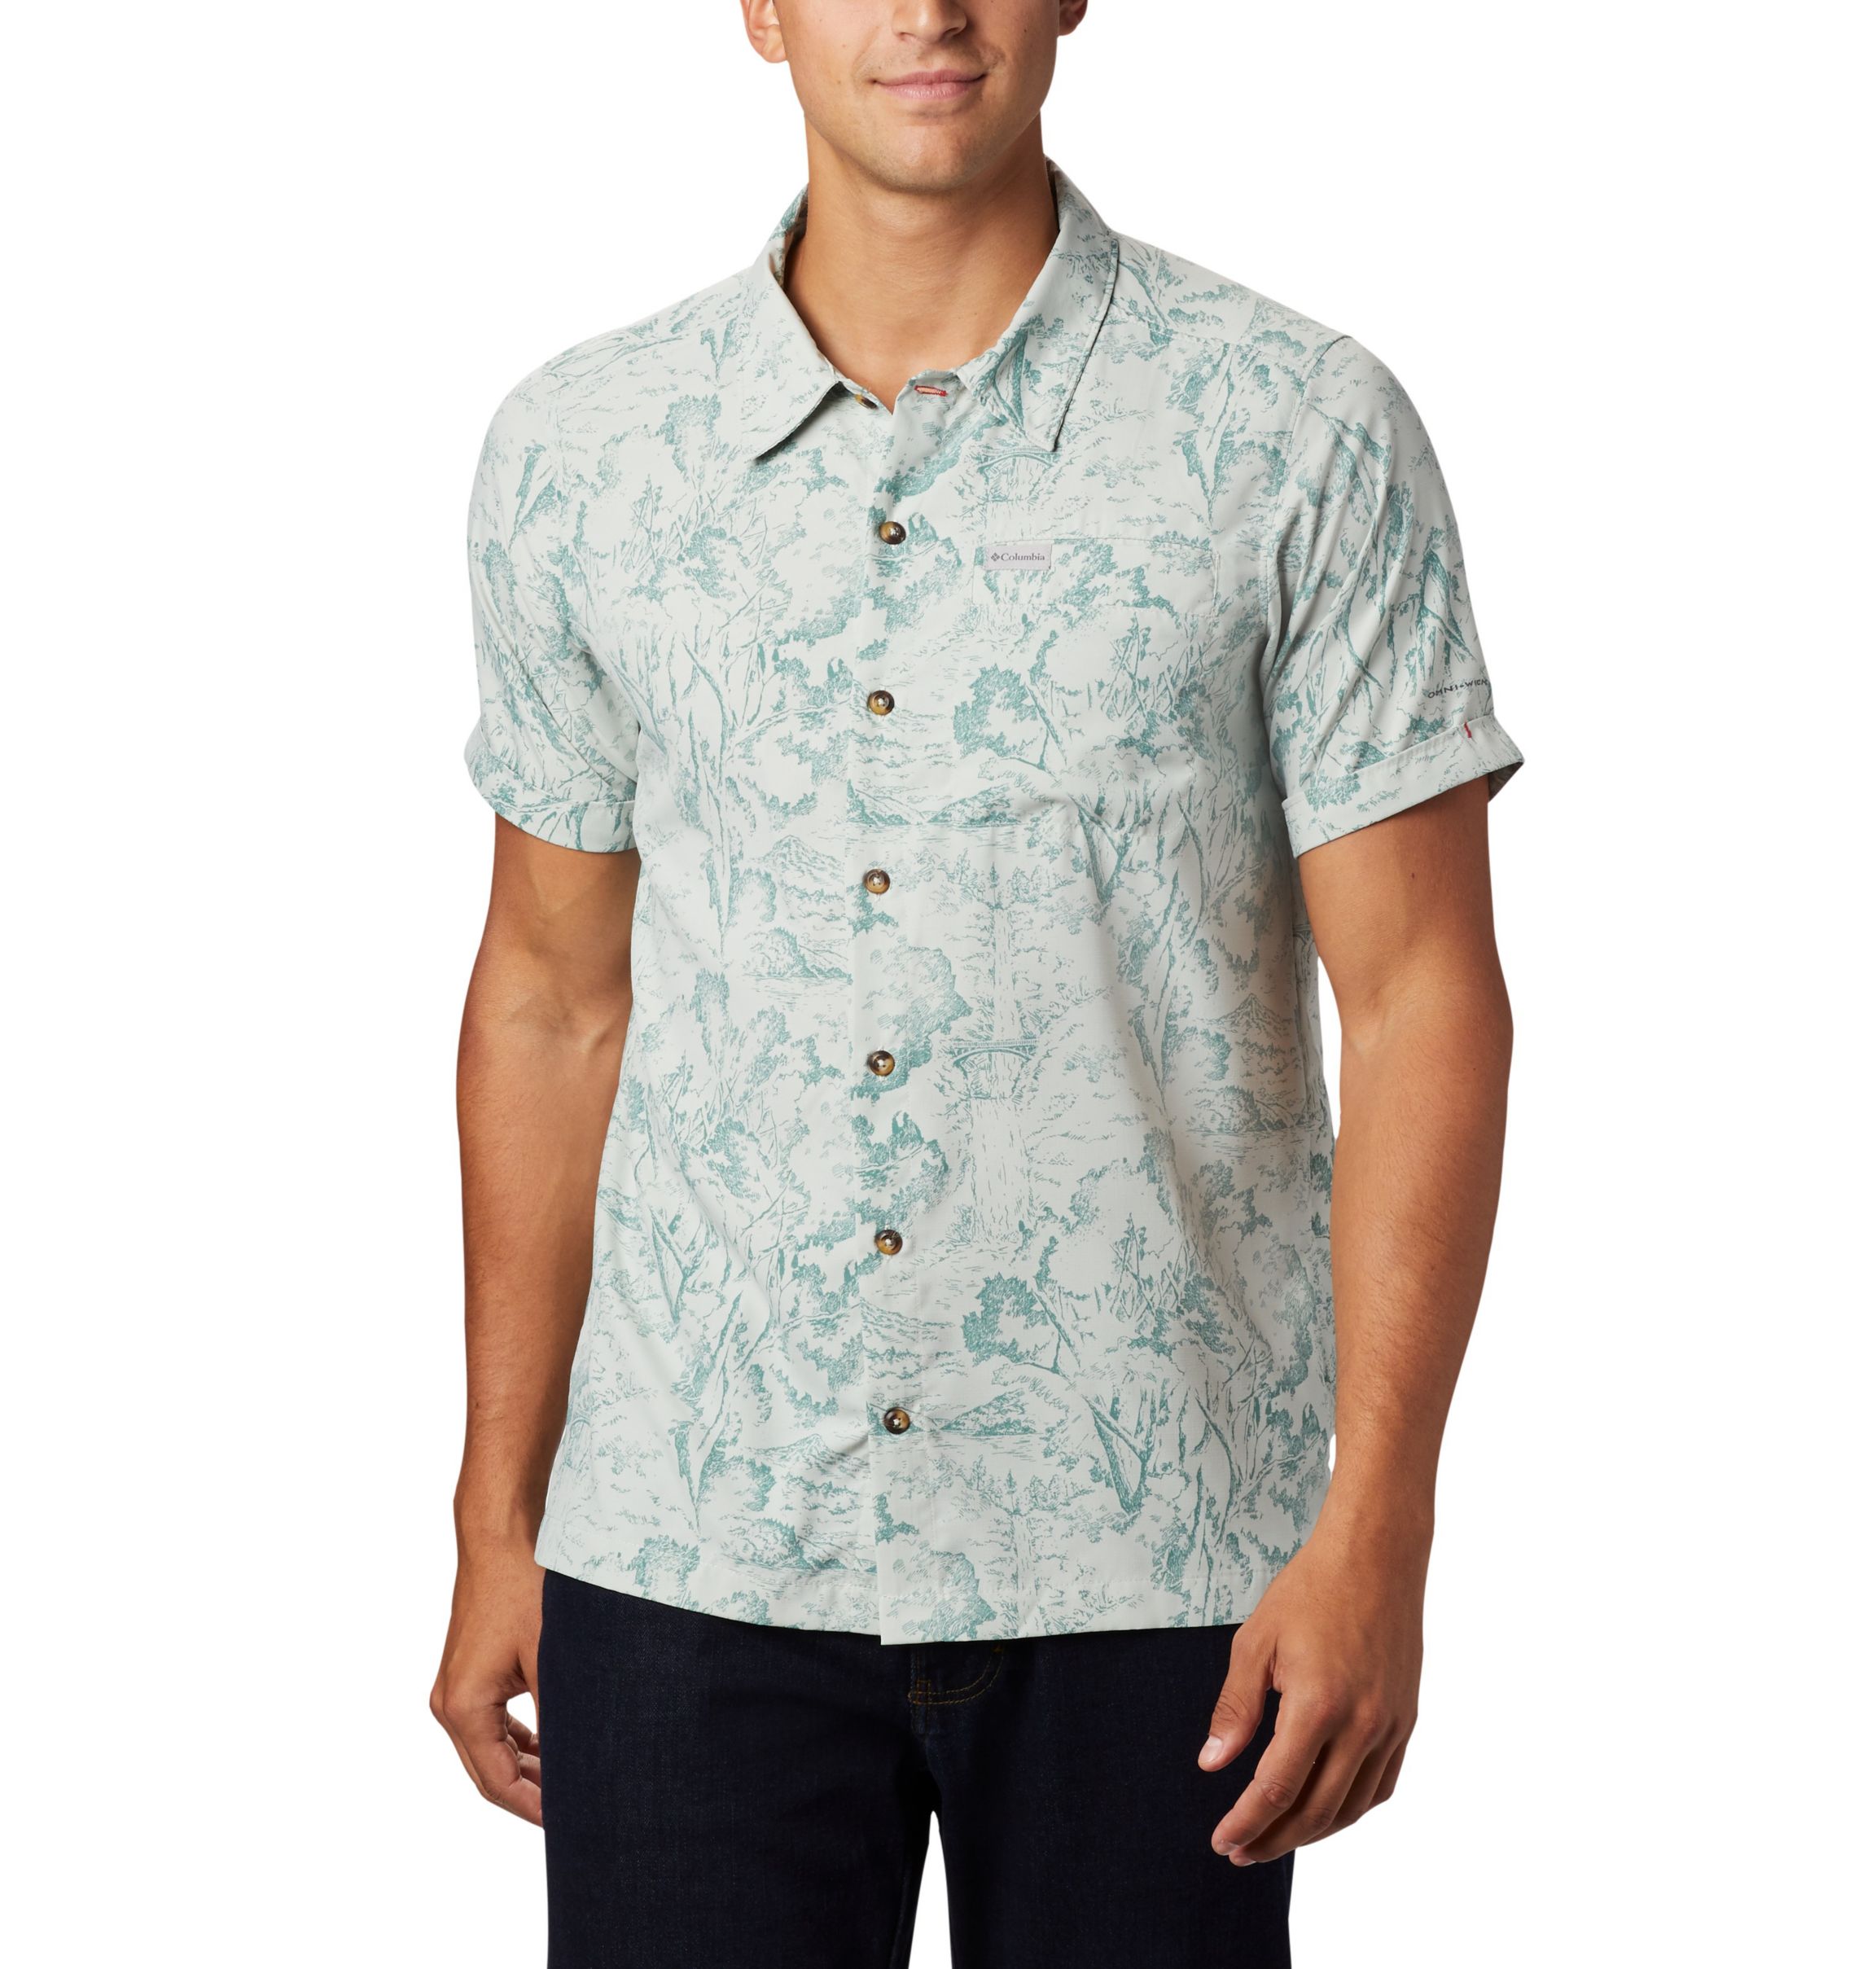 Columbia - Men's Outdoor elements shirt - Men's Shirts - Columbia 